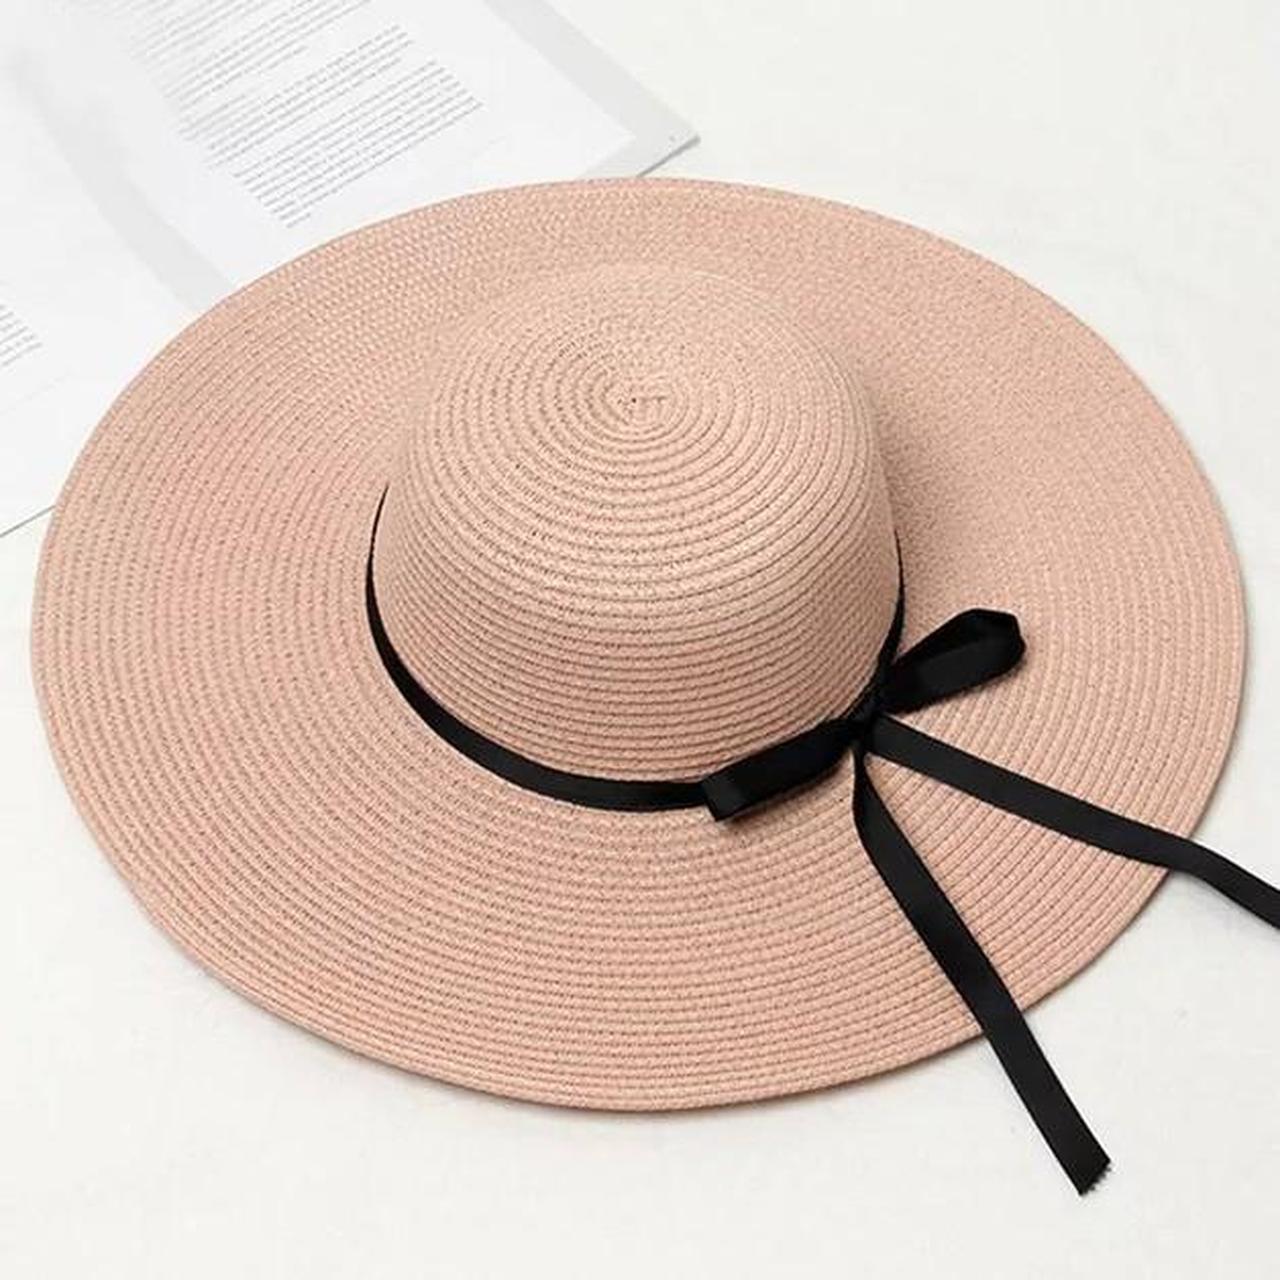 Straw summer sun hats for women sun protection beach - Depop